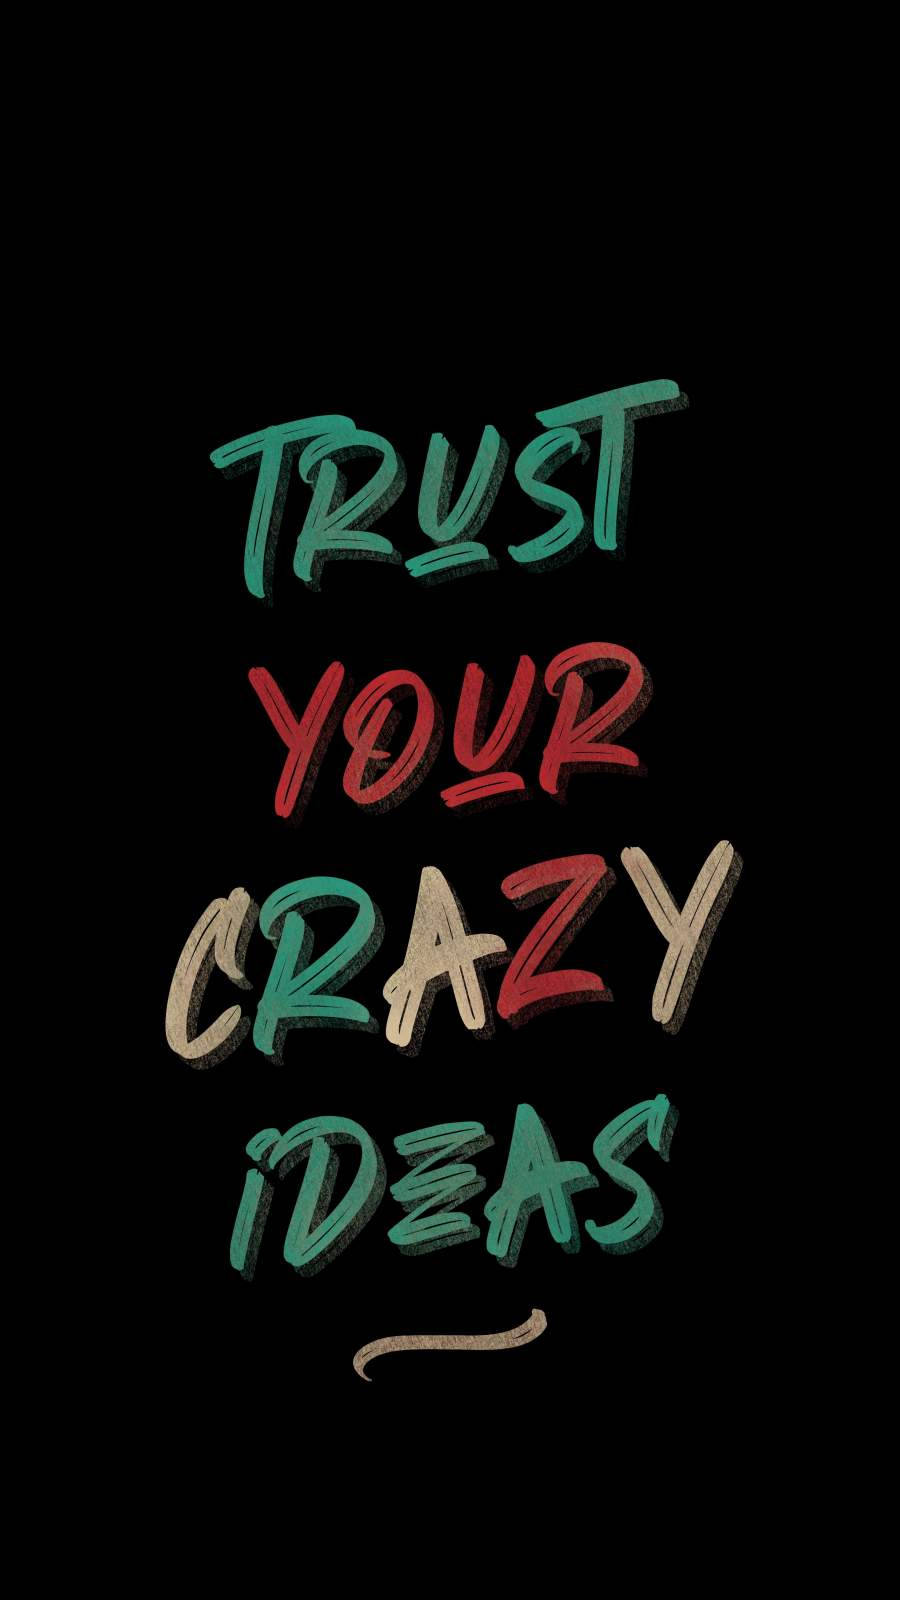 Trust Your Crazy Ideas Background